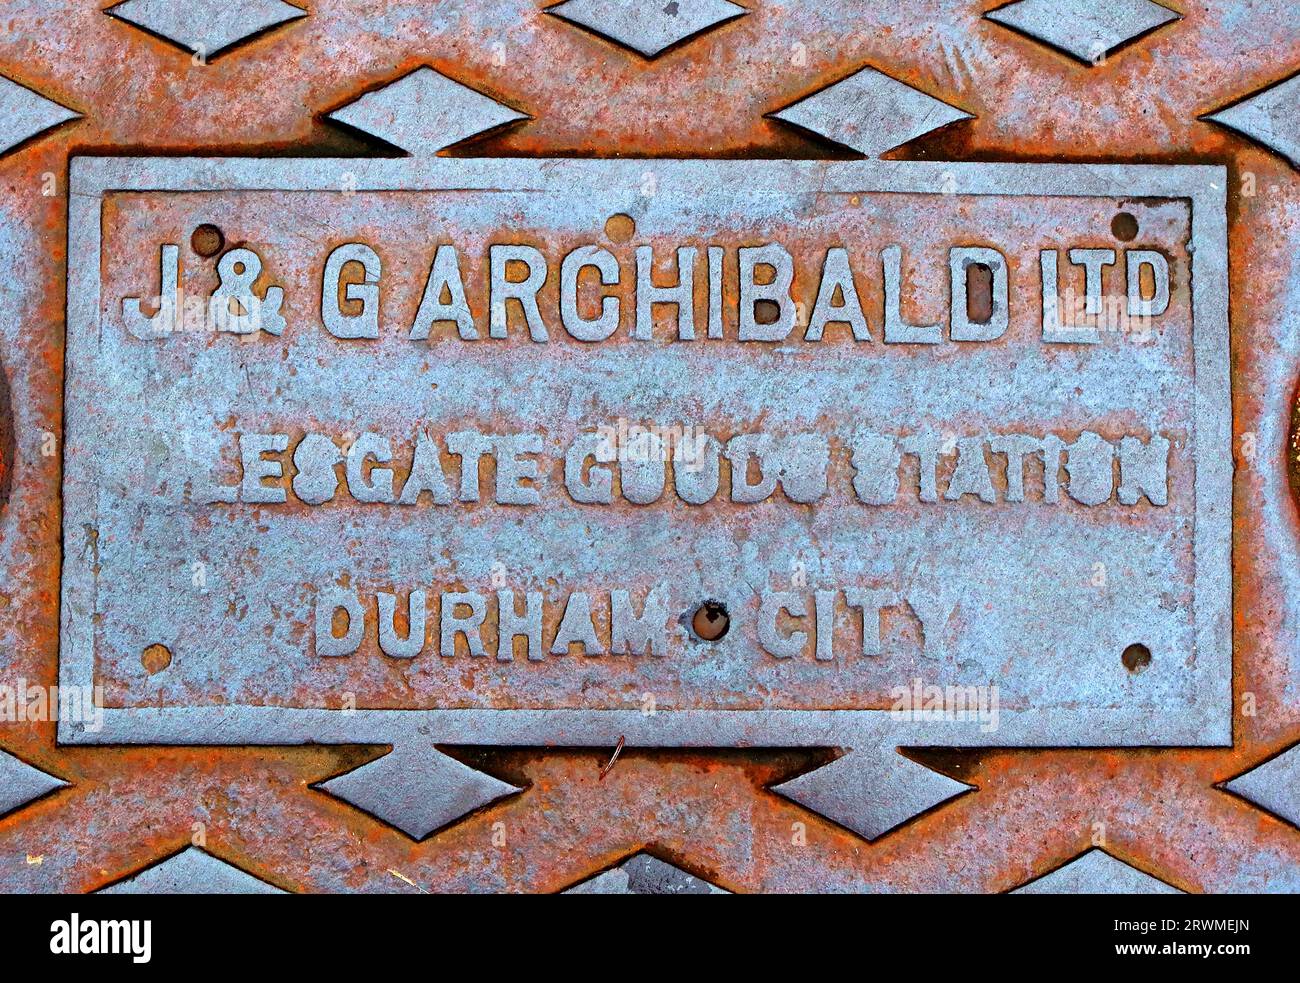 J&G Archibald Ltd grid, Gilesgate Goods Station, Durham City, England, UK, DH1 1QG Stock Photo